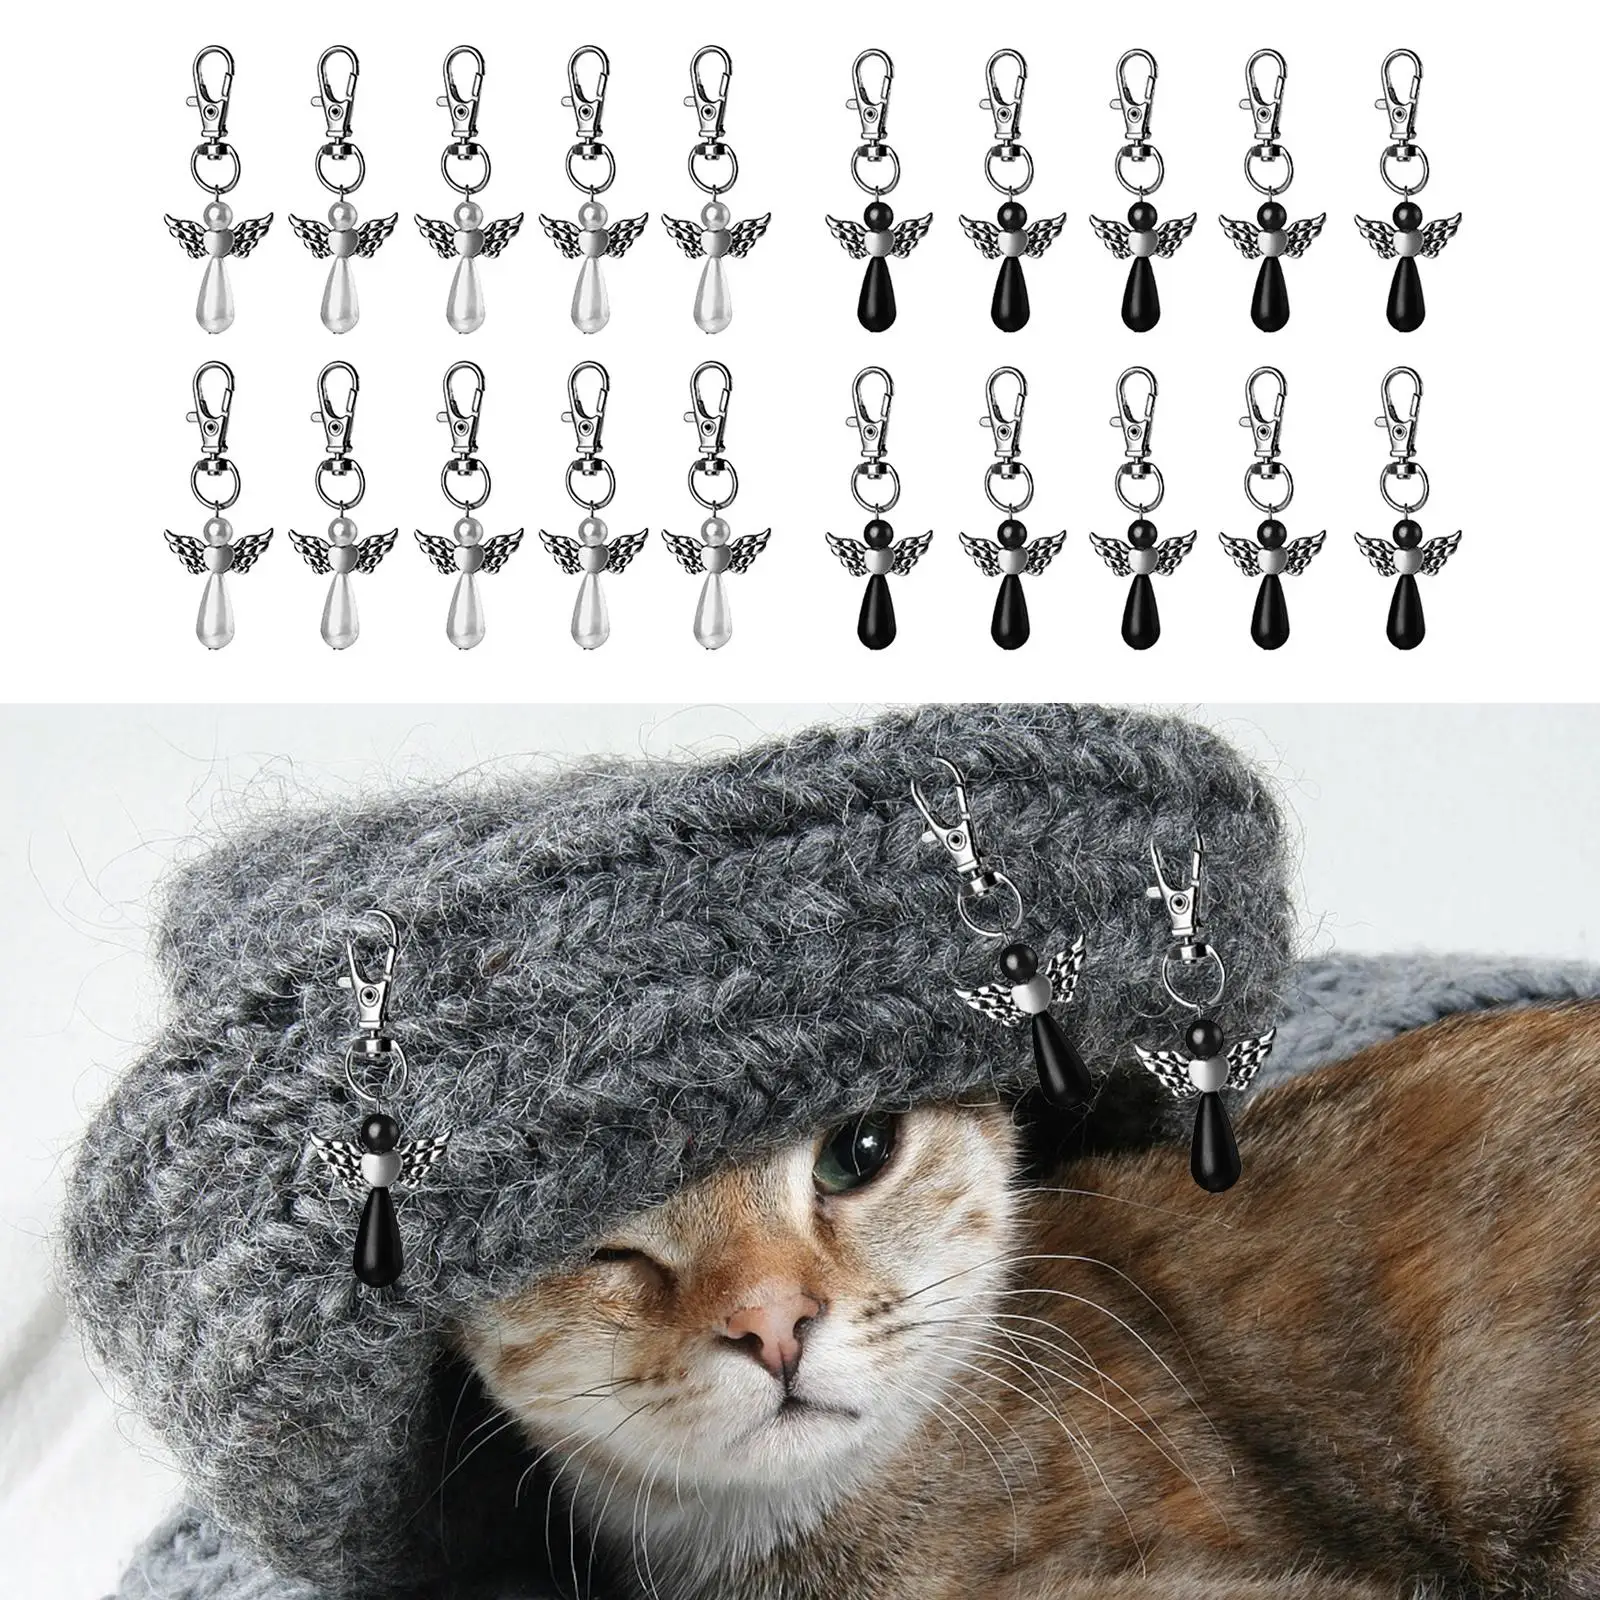 10 Pcs Angel Keychain Knitting Markers in The of , 10 Pcs Keys Chain Pendant Pendant Bracelet Jewelry